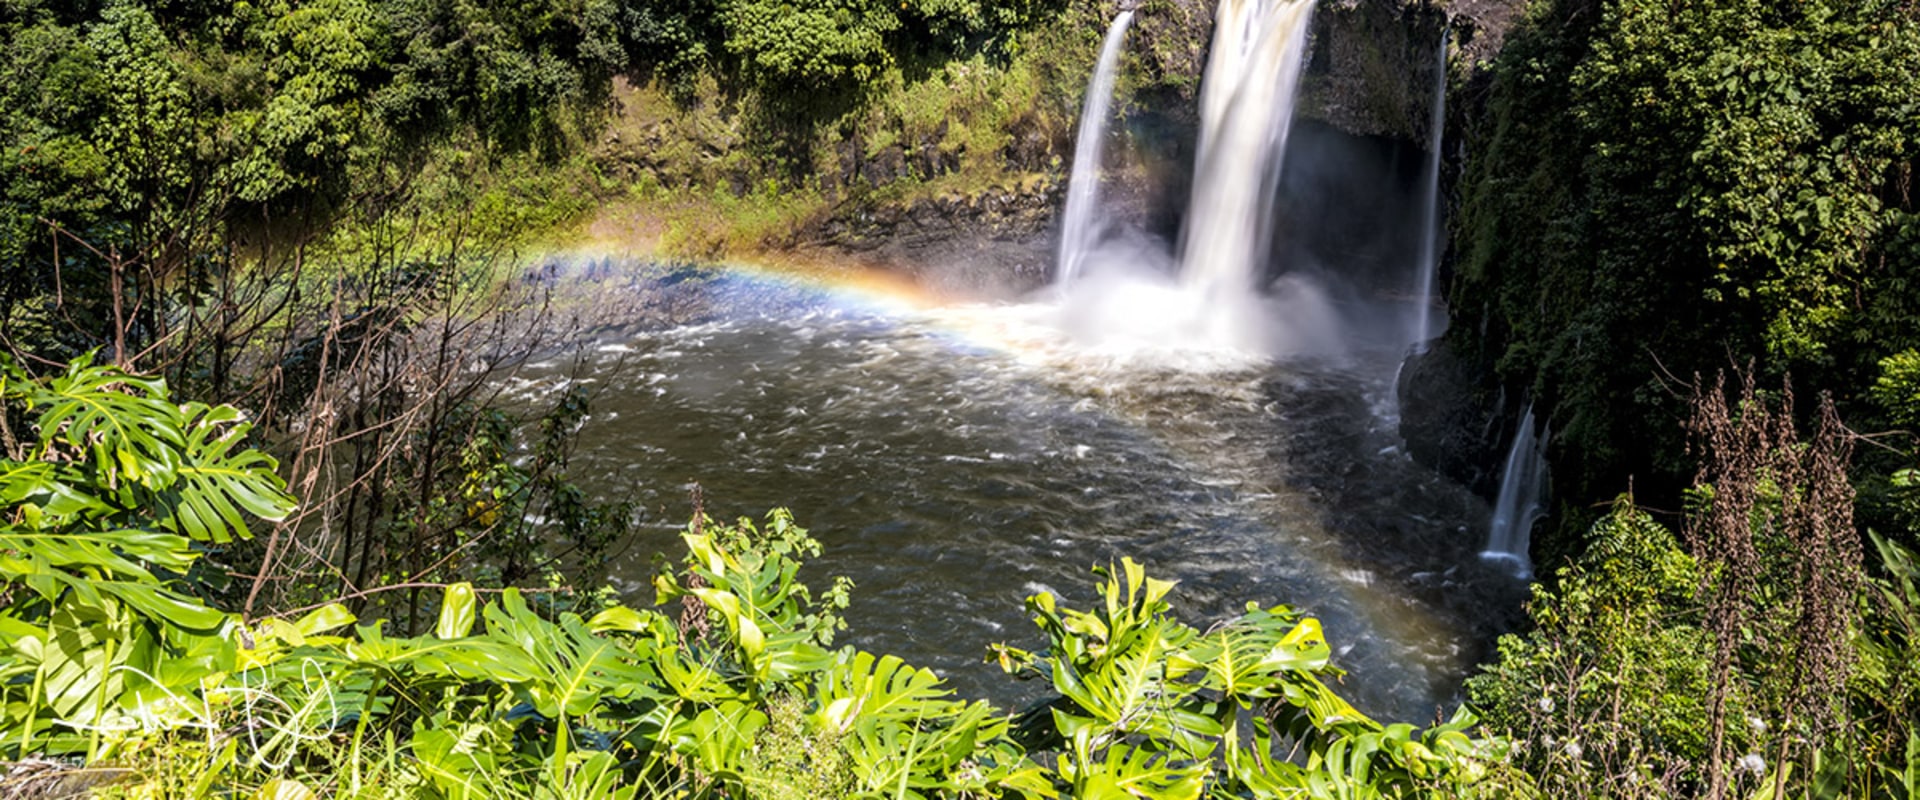 Capture the Beauty of Hawaii with a Wildlife Photographer in Kailua-Kona